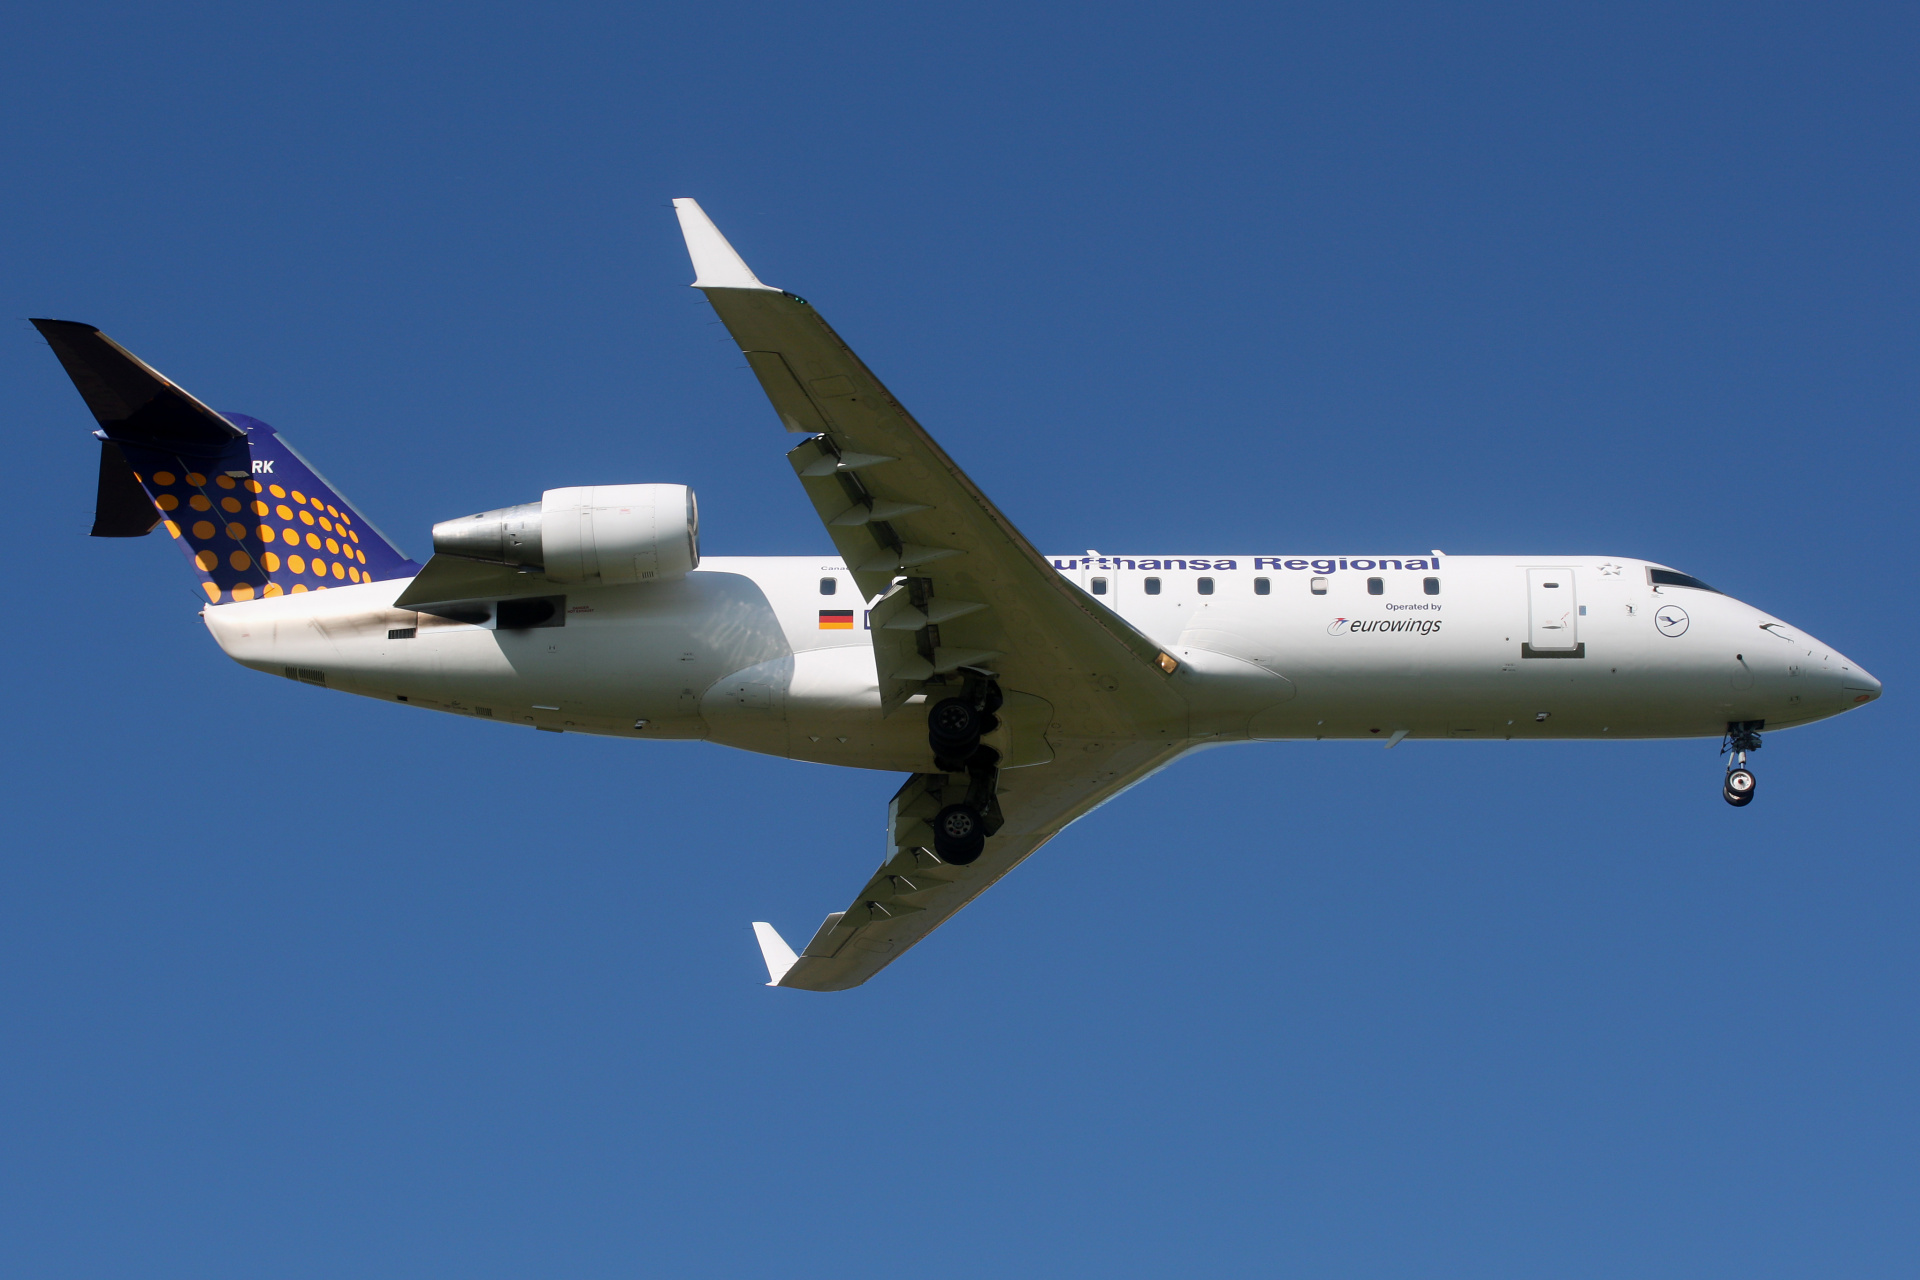 D-ACRK (Eurowings) (Aircraft » EPWA Spotting » Bombardier CL-600 Regional Jet » CRJ-200 » Lufthansa Regional)